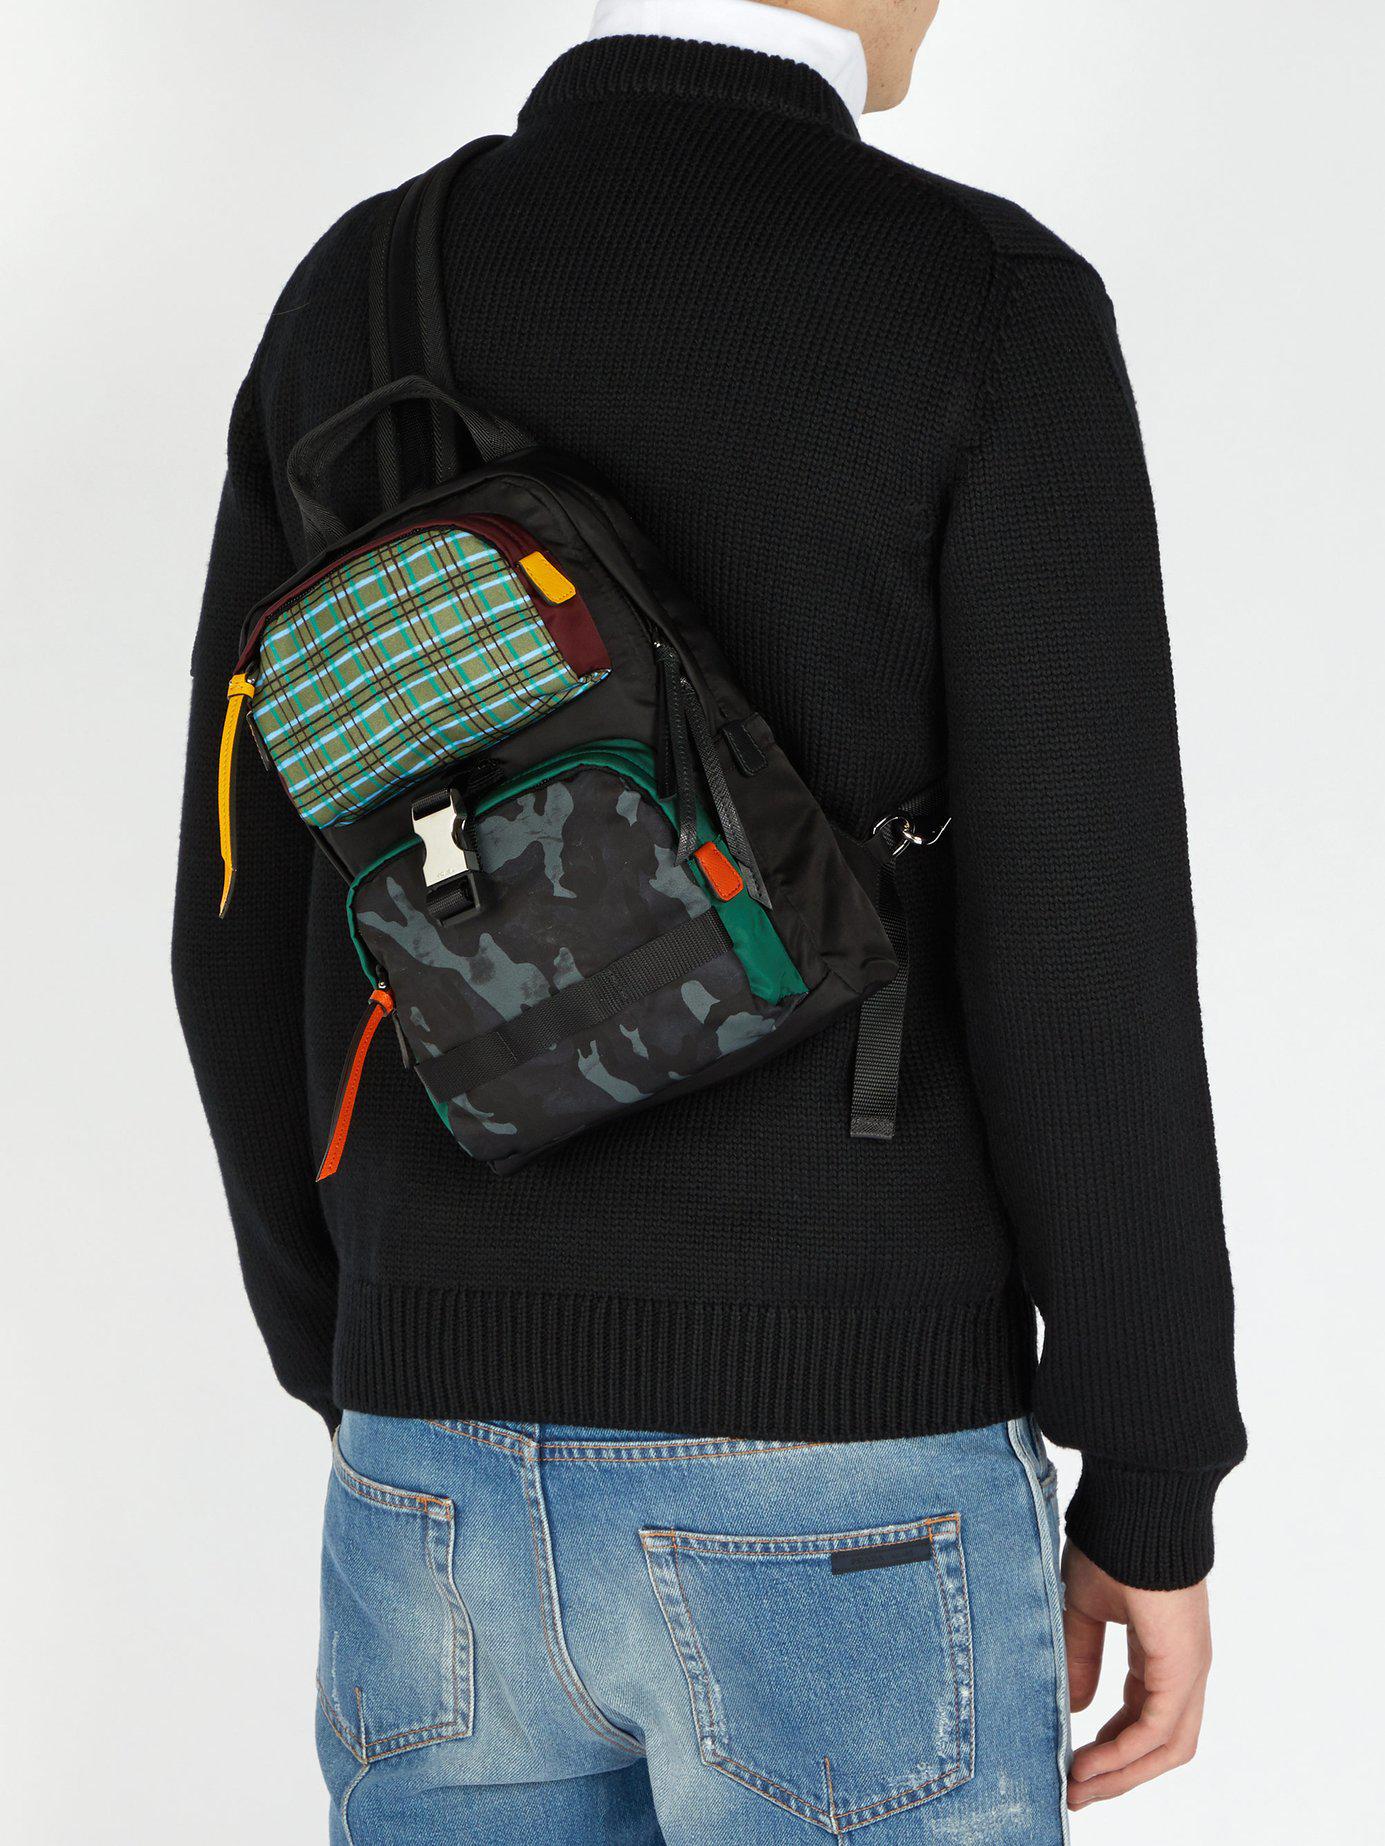 prada single strap backpack